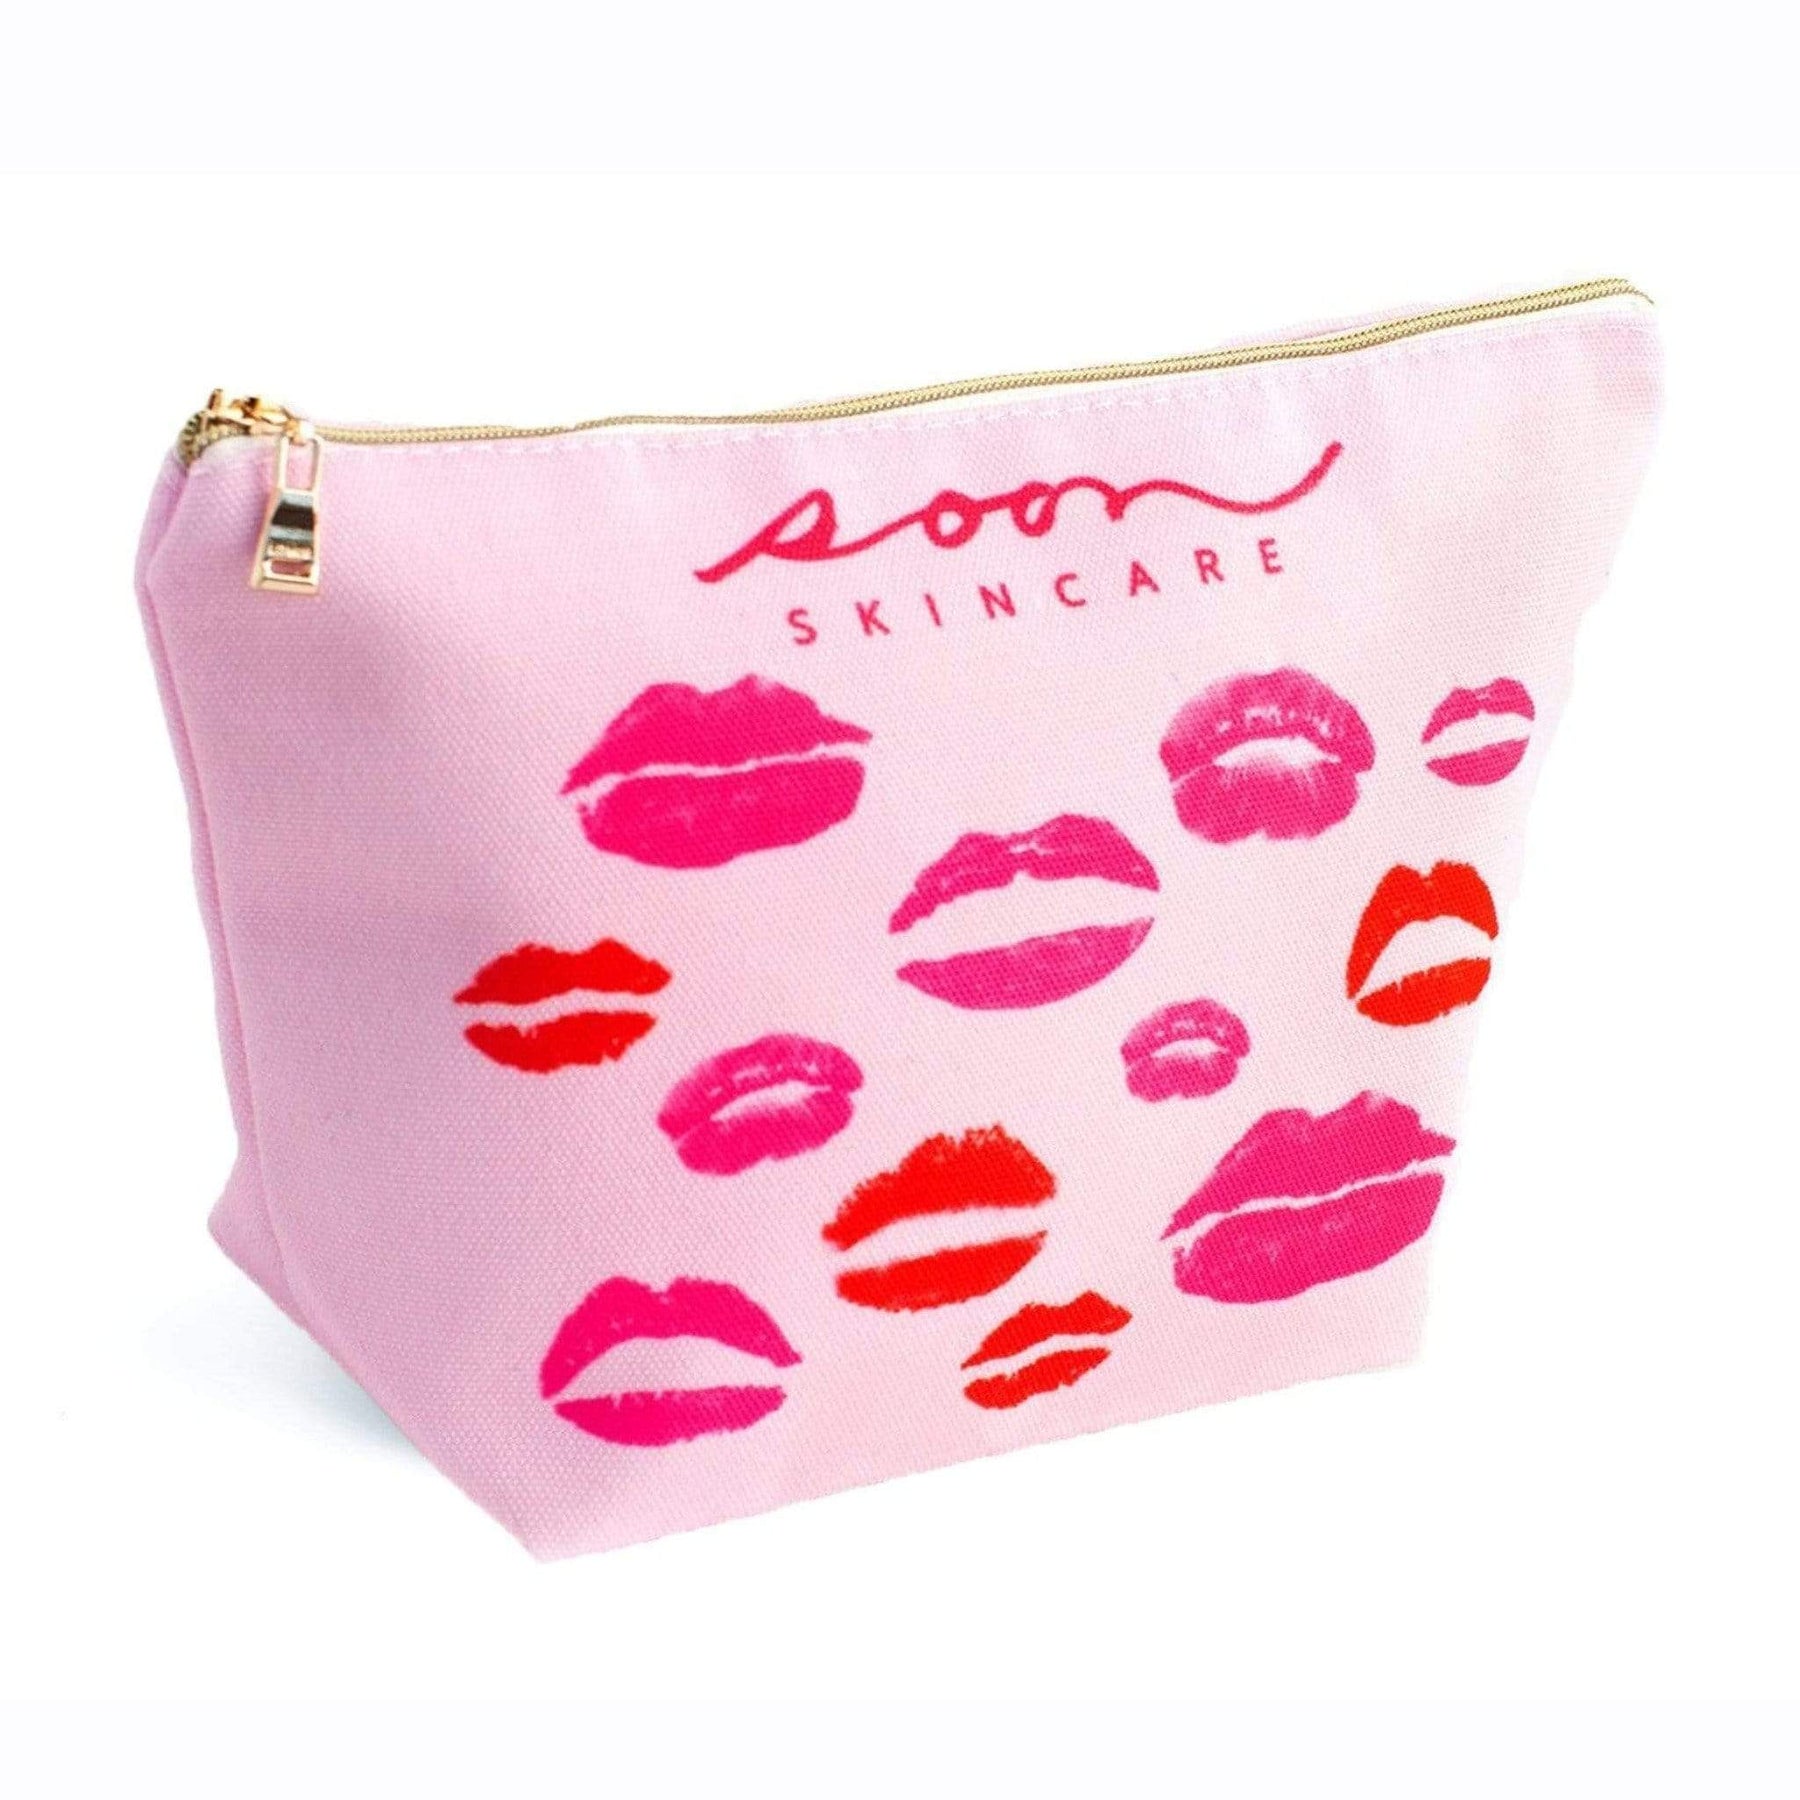 Soon Skincare Pink Lips Makeup Bag